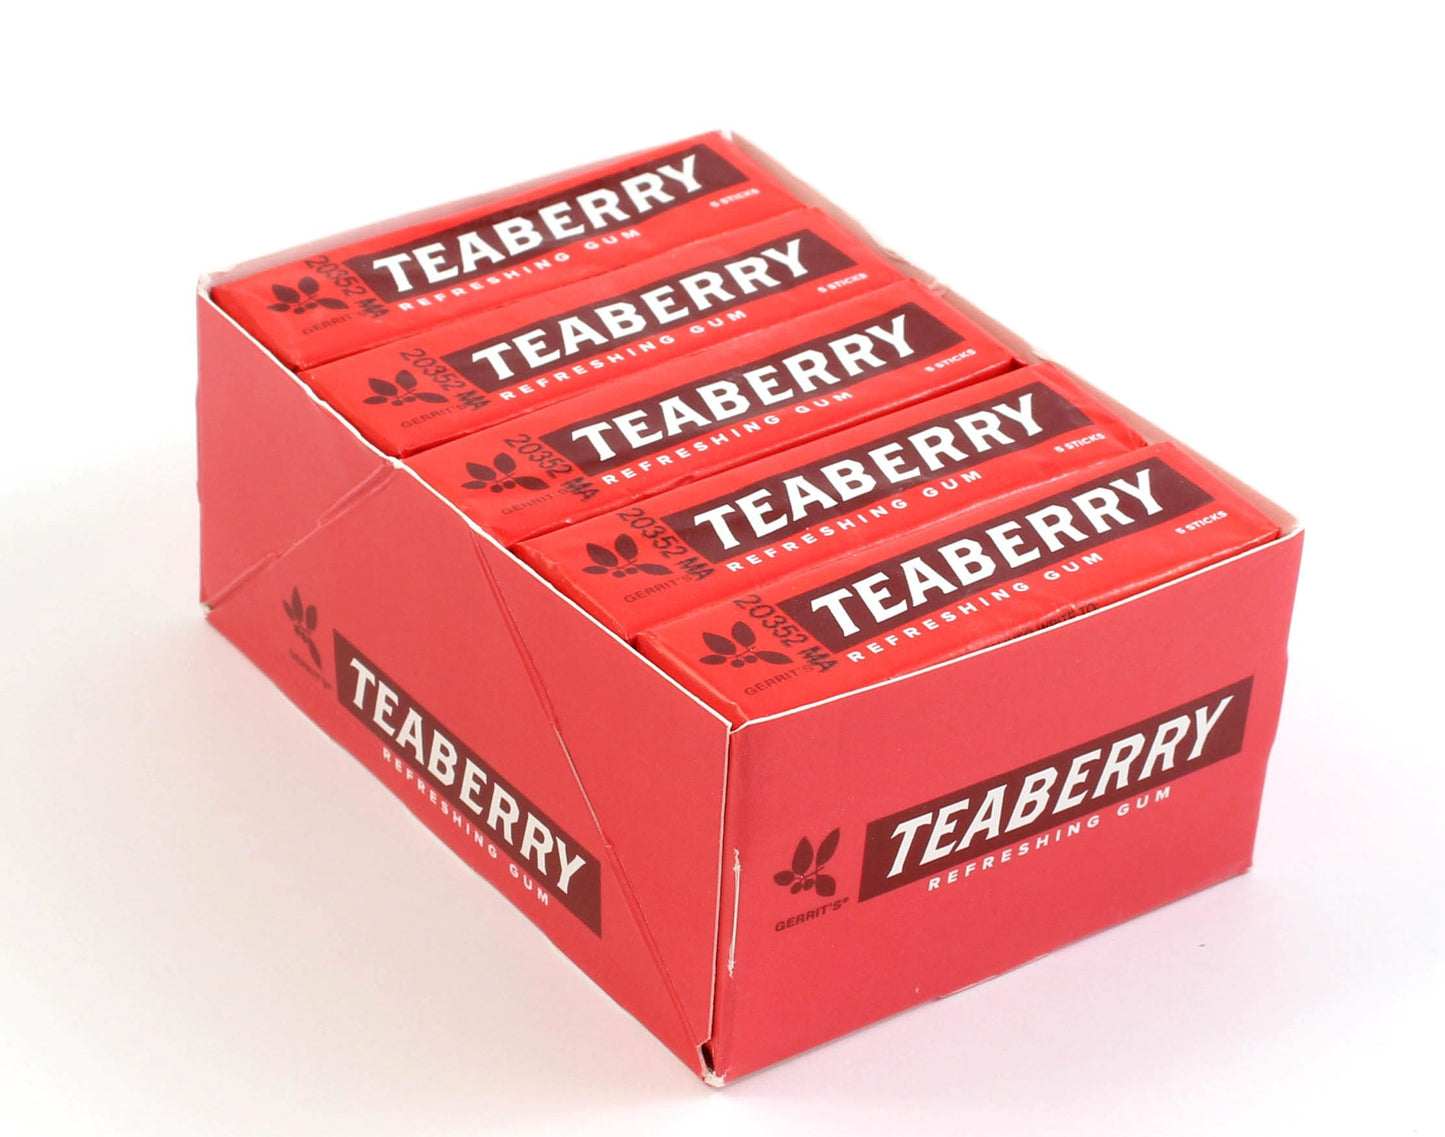 Gerrit's Teaberry Refreshing Gum - 20ct